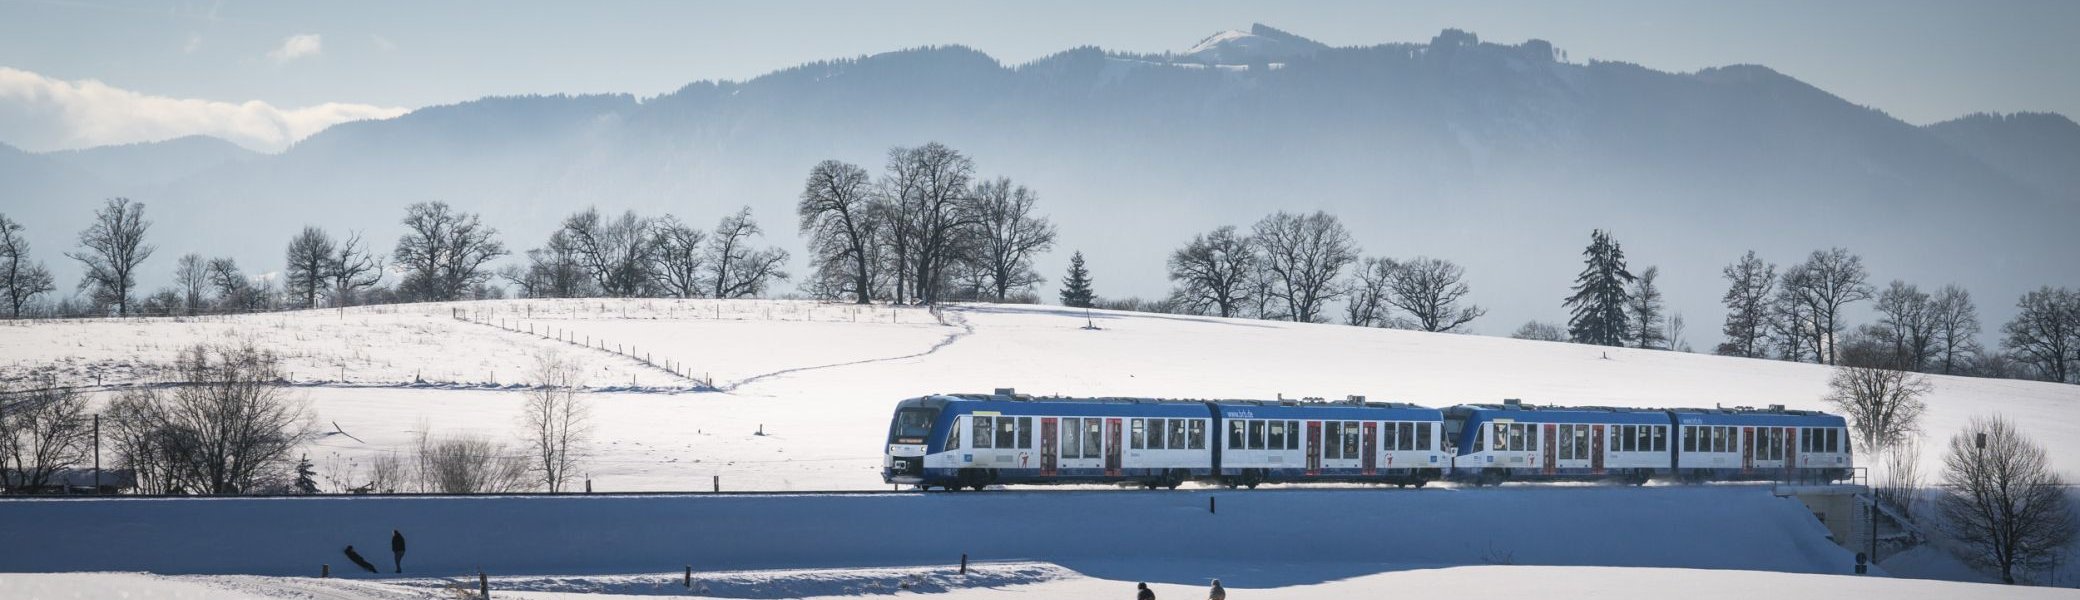 Winter RegioBahn Lenggries | © Bayerische Regiobahn, Dietmar Denger 2021